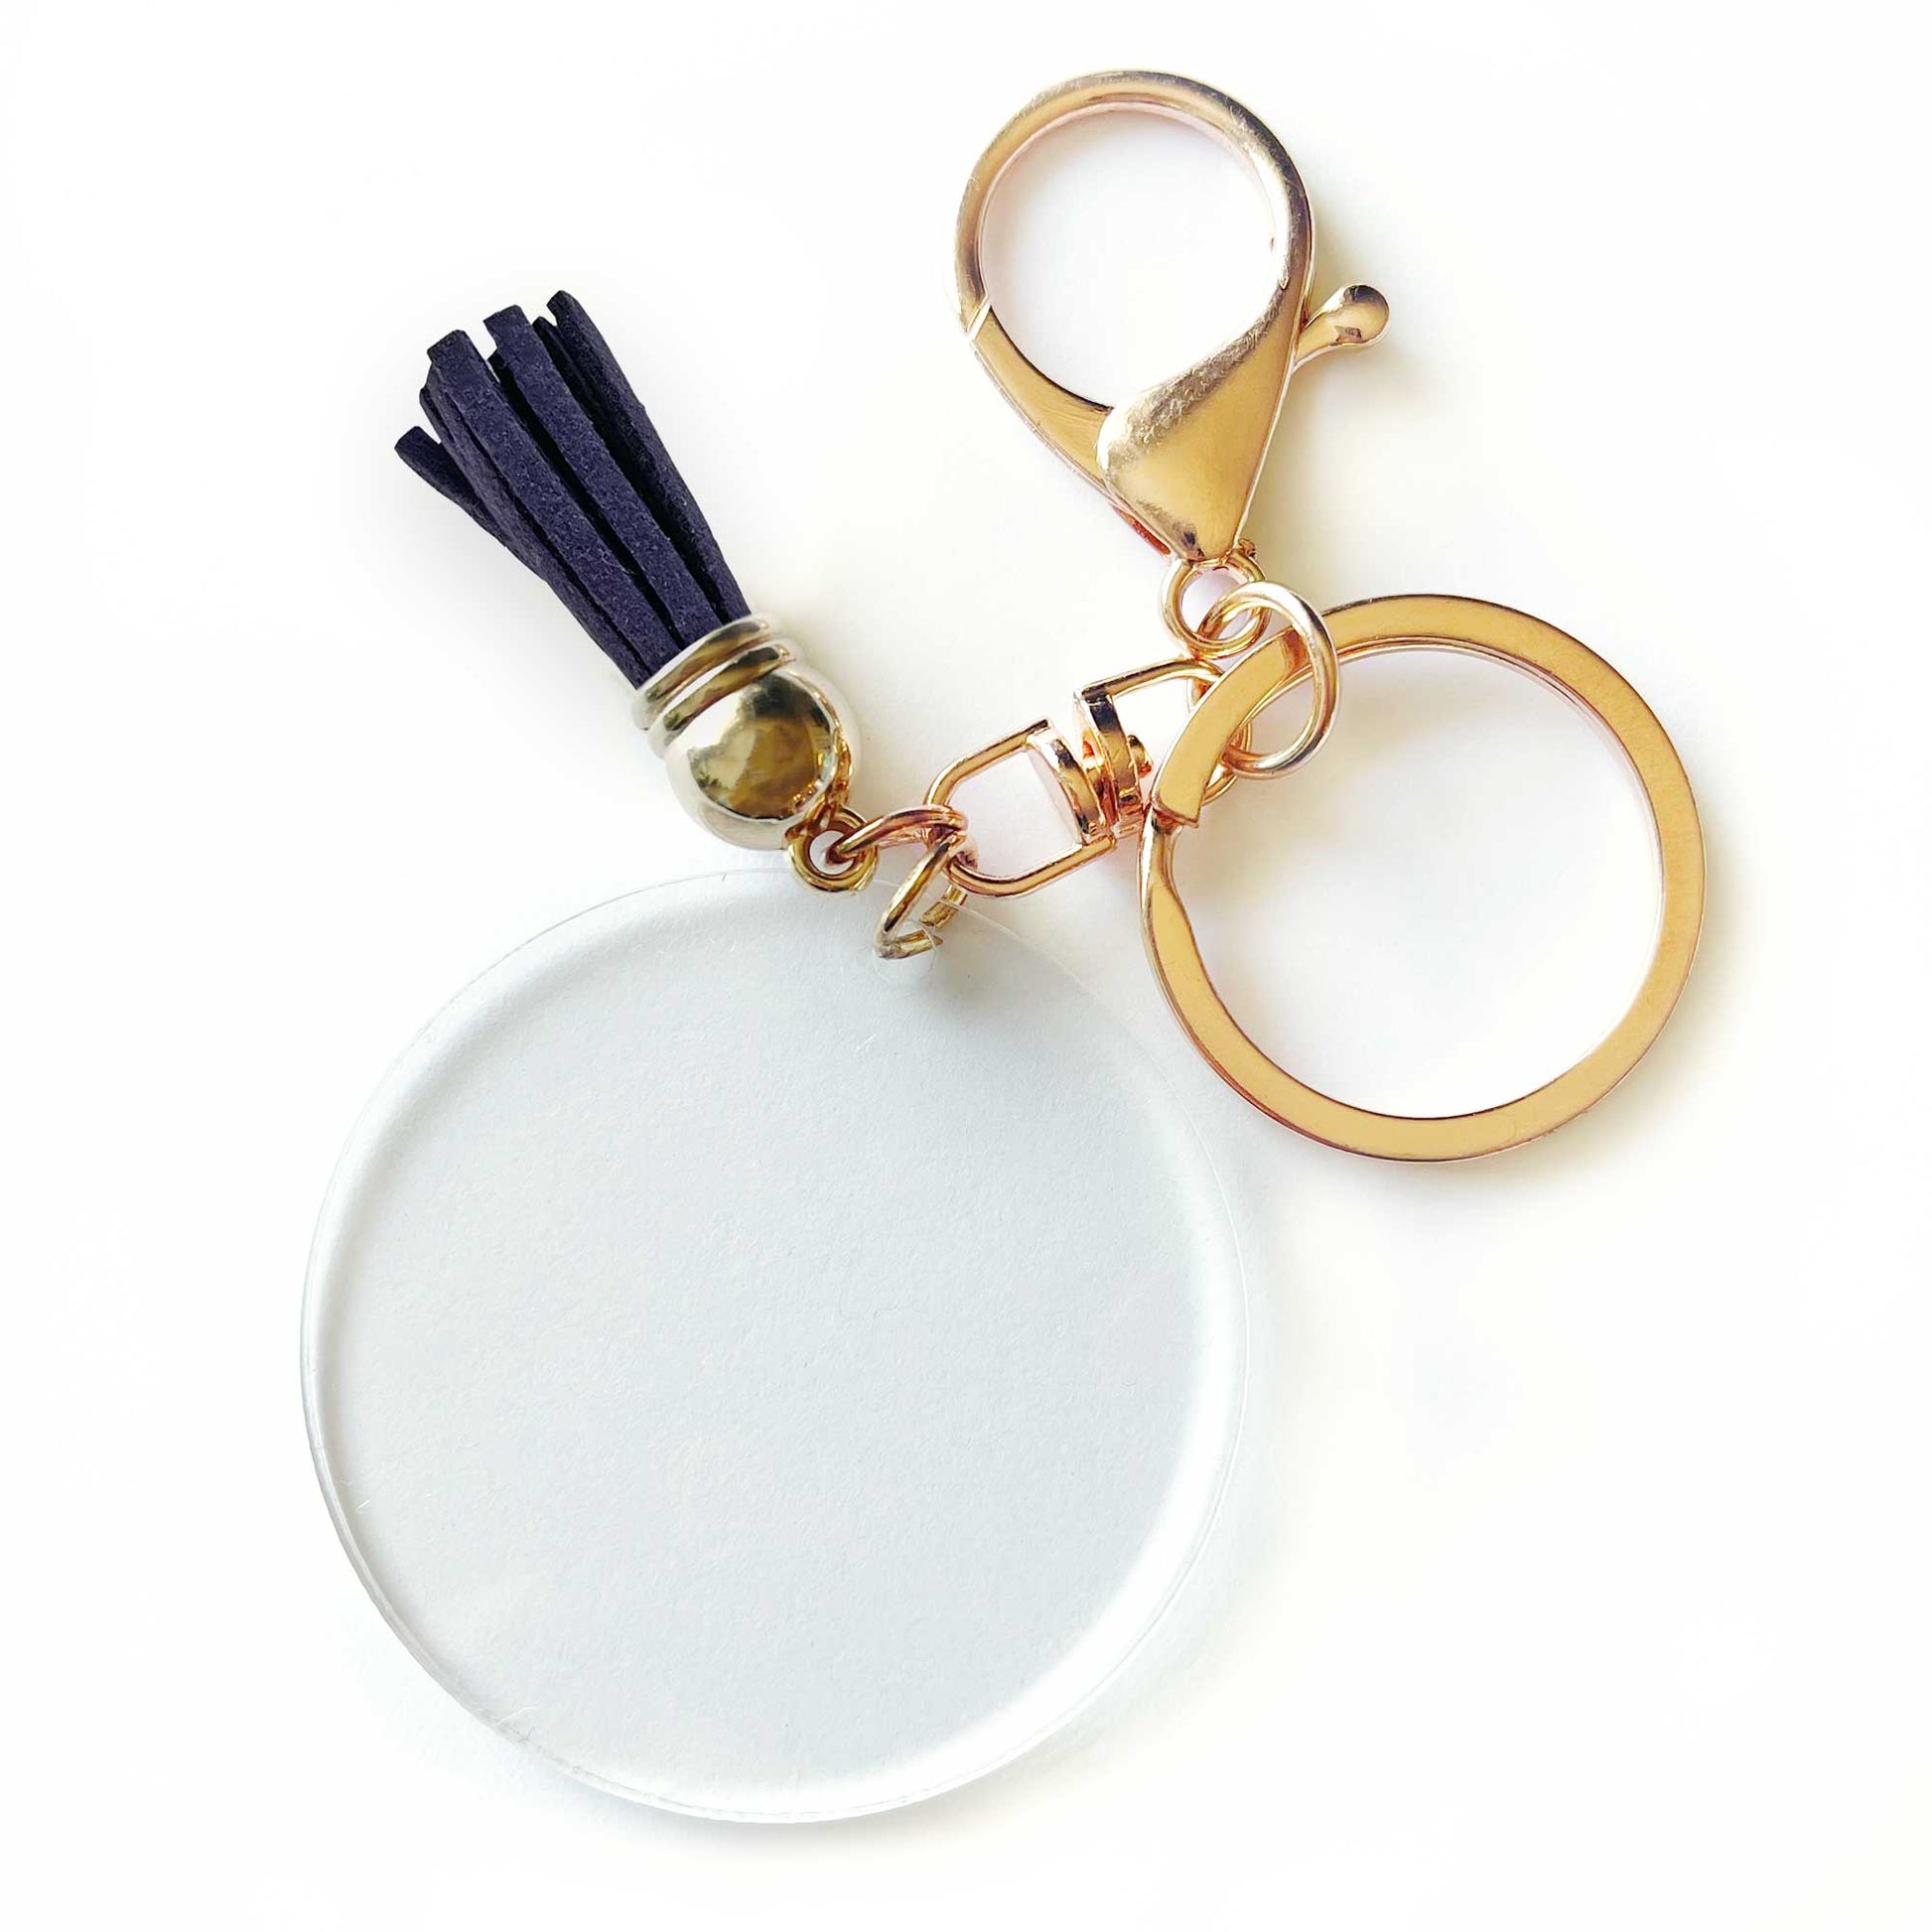 Caluya Design Gold Blank Keychain for Craft & DIY Project Black